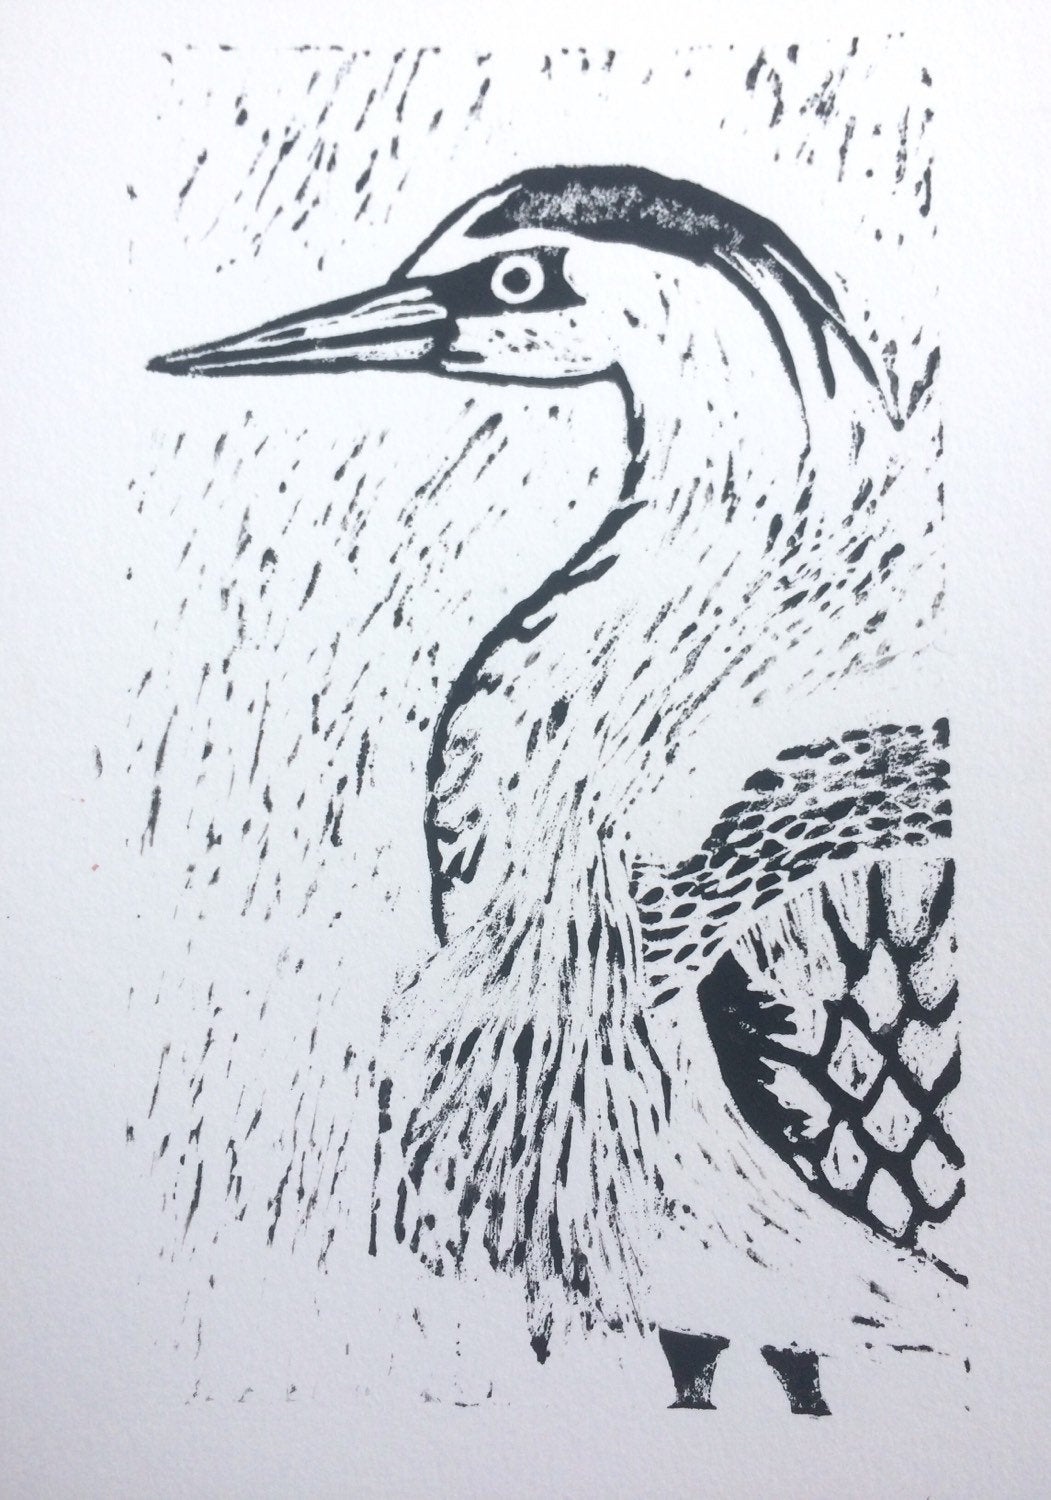 HERON Lino Print Bird Art Stork linoprint, One Unframed A4 Linocut Print of Wild Bird, Wildlife Art hand Pulled Black Ink Print Limited Edit